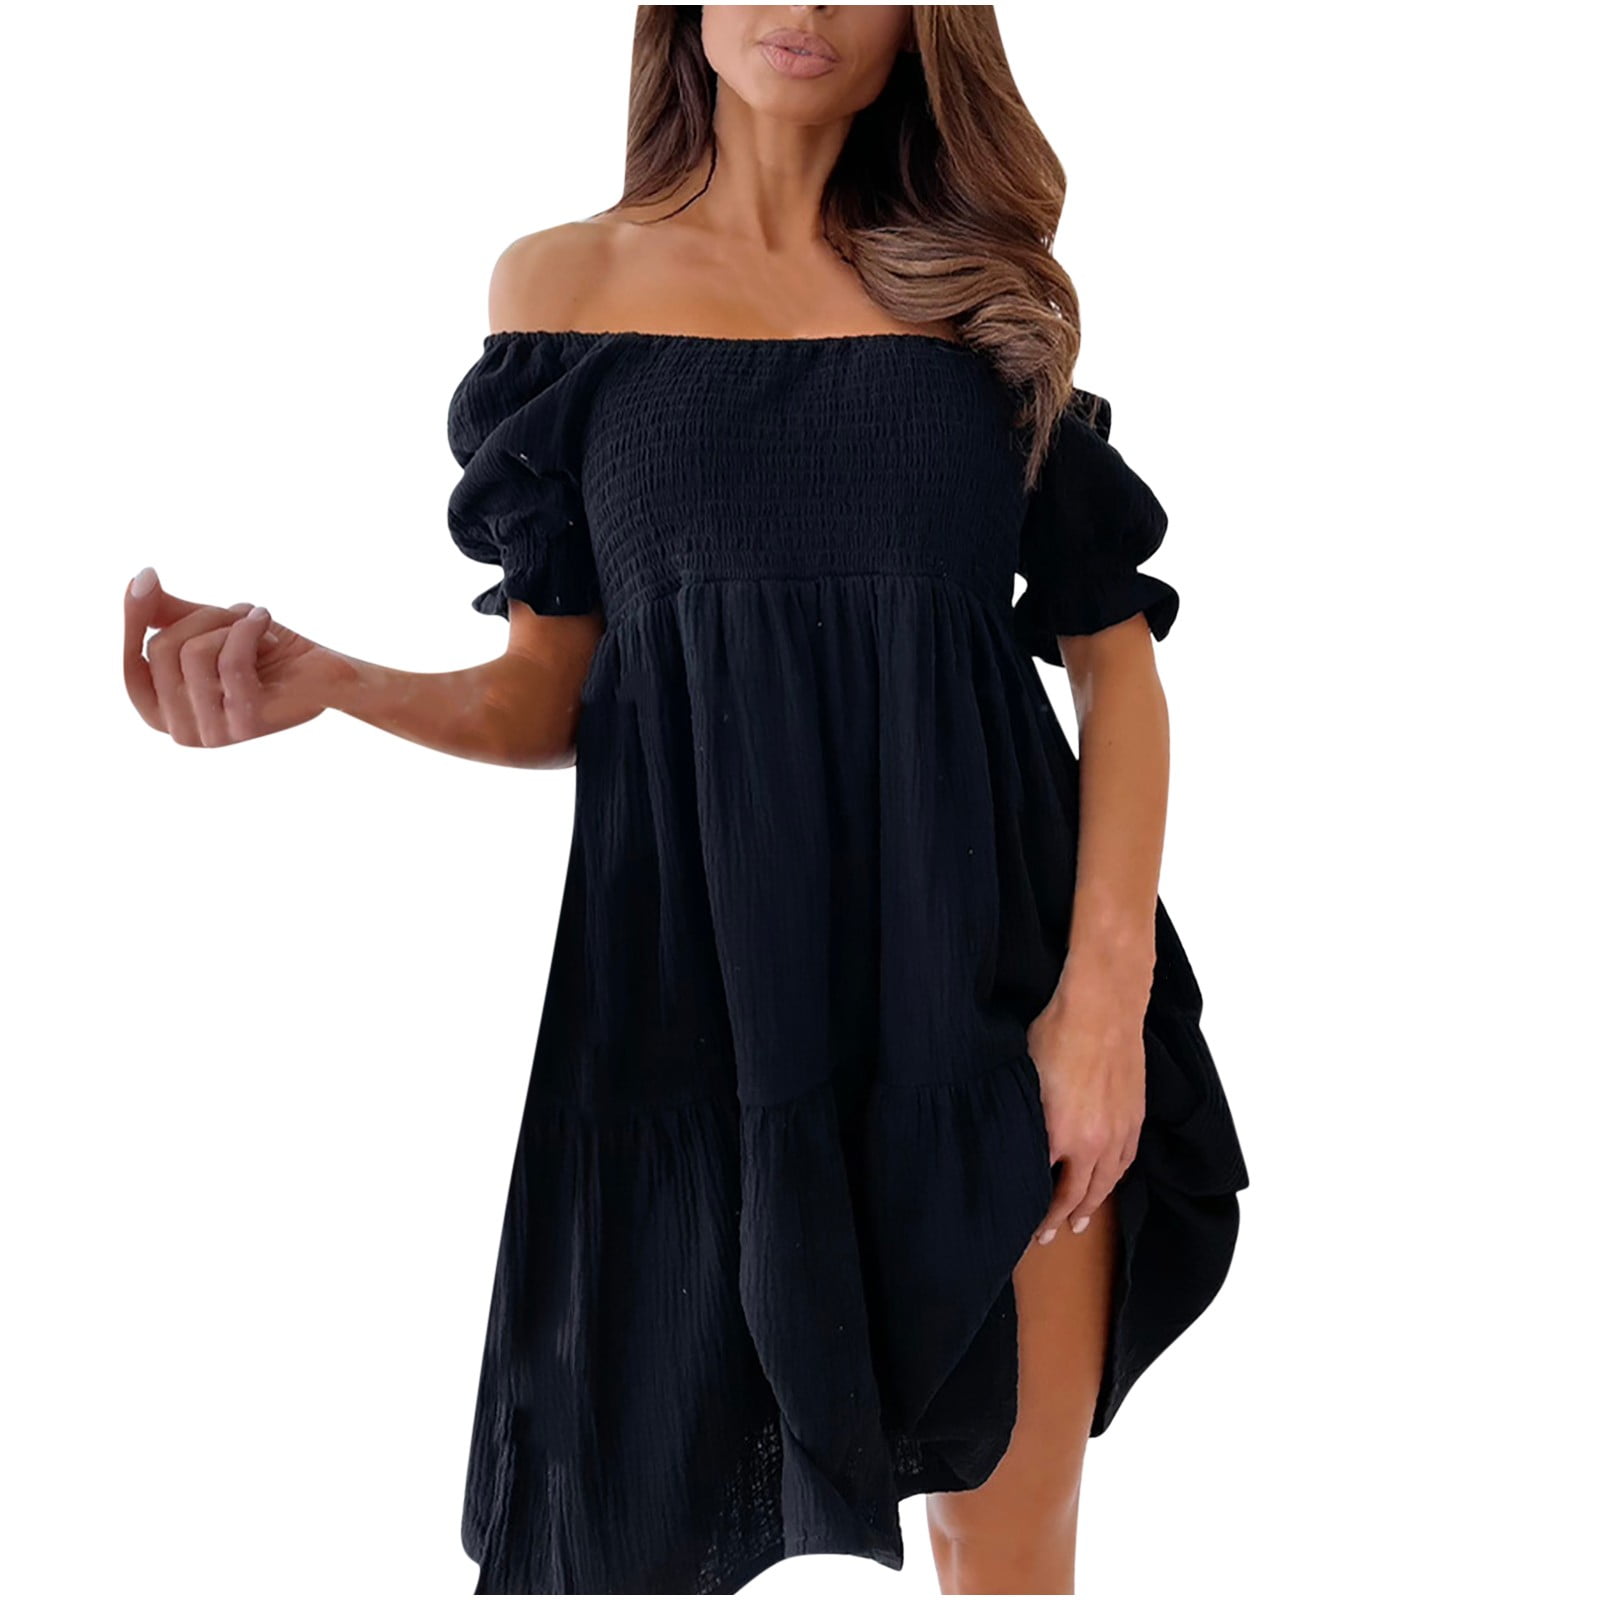 Oxodoi Women's Dresses One Shoulder Short Sleeve Dress Scoop Neck